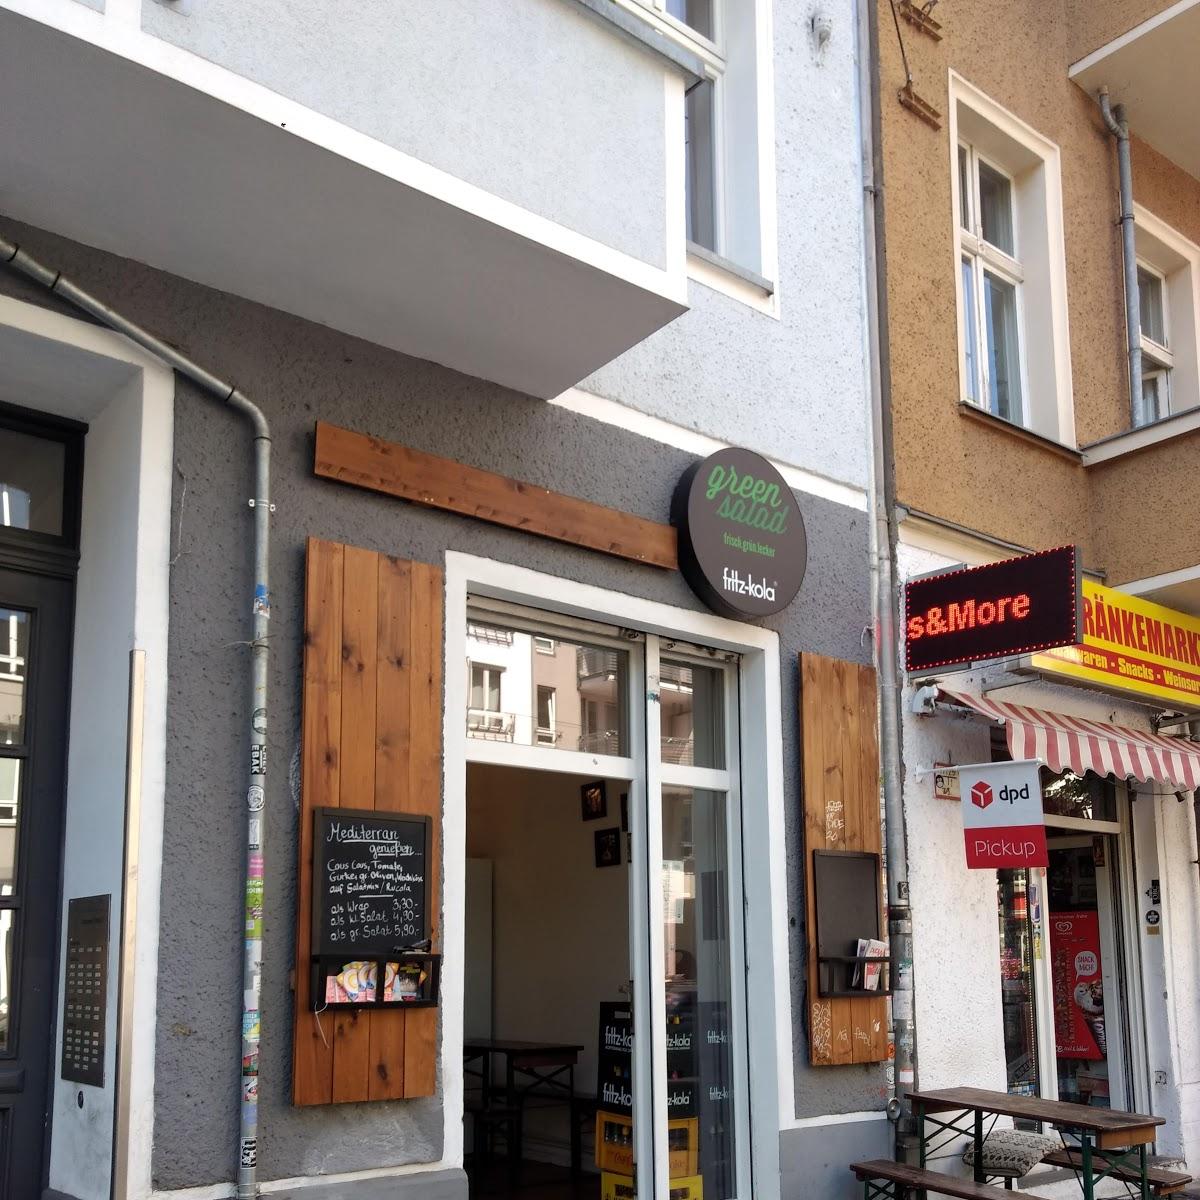 Restaurant "Green Salad" in Berlin